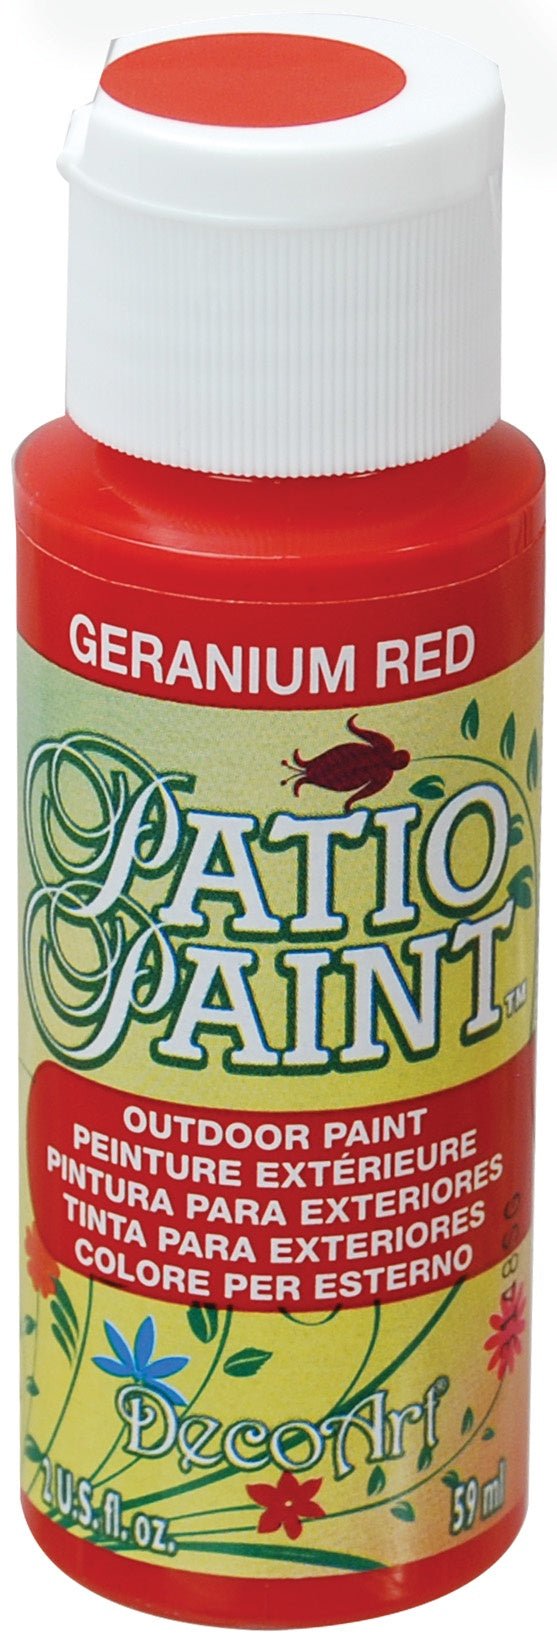 Deco Art Patio Paint 2oz - Geranium Red